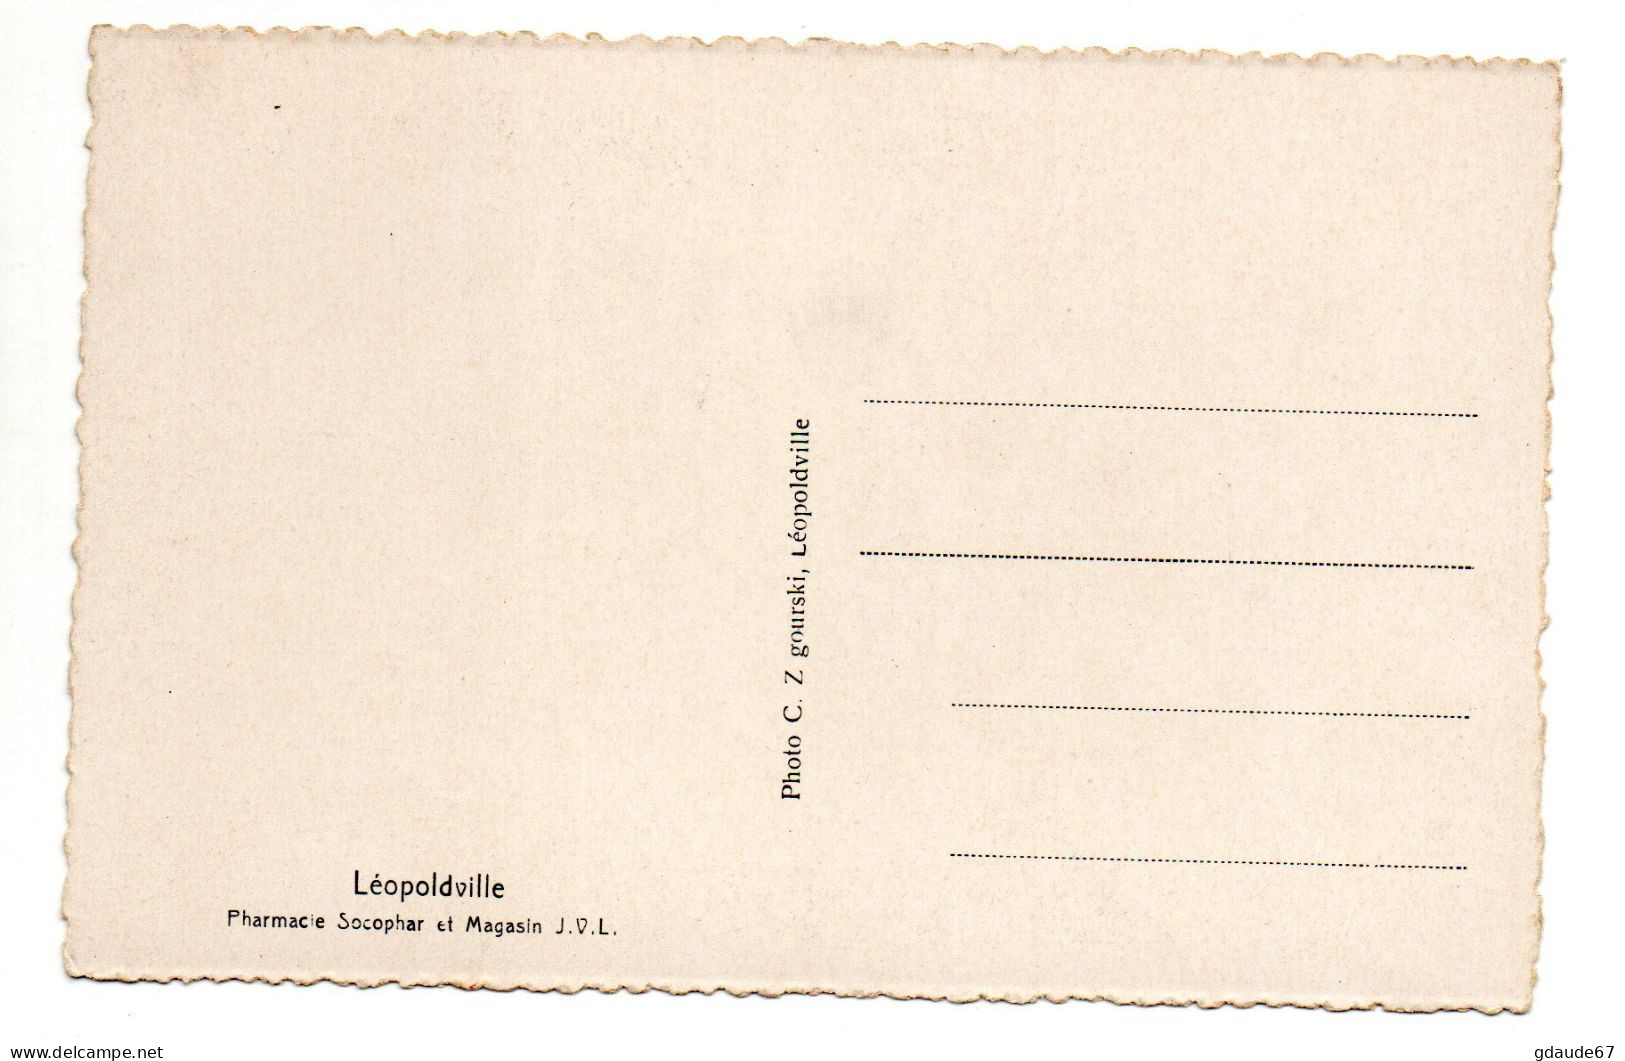 LEOPOLDVILLE (CONGO BELGE) - PHARMACIE SOCOPHAR ET MAGASIN J.V.L. - Kinshasa - Léopoldville